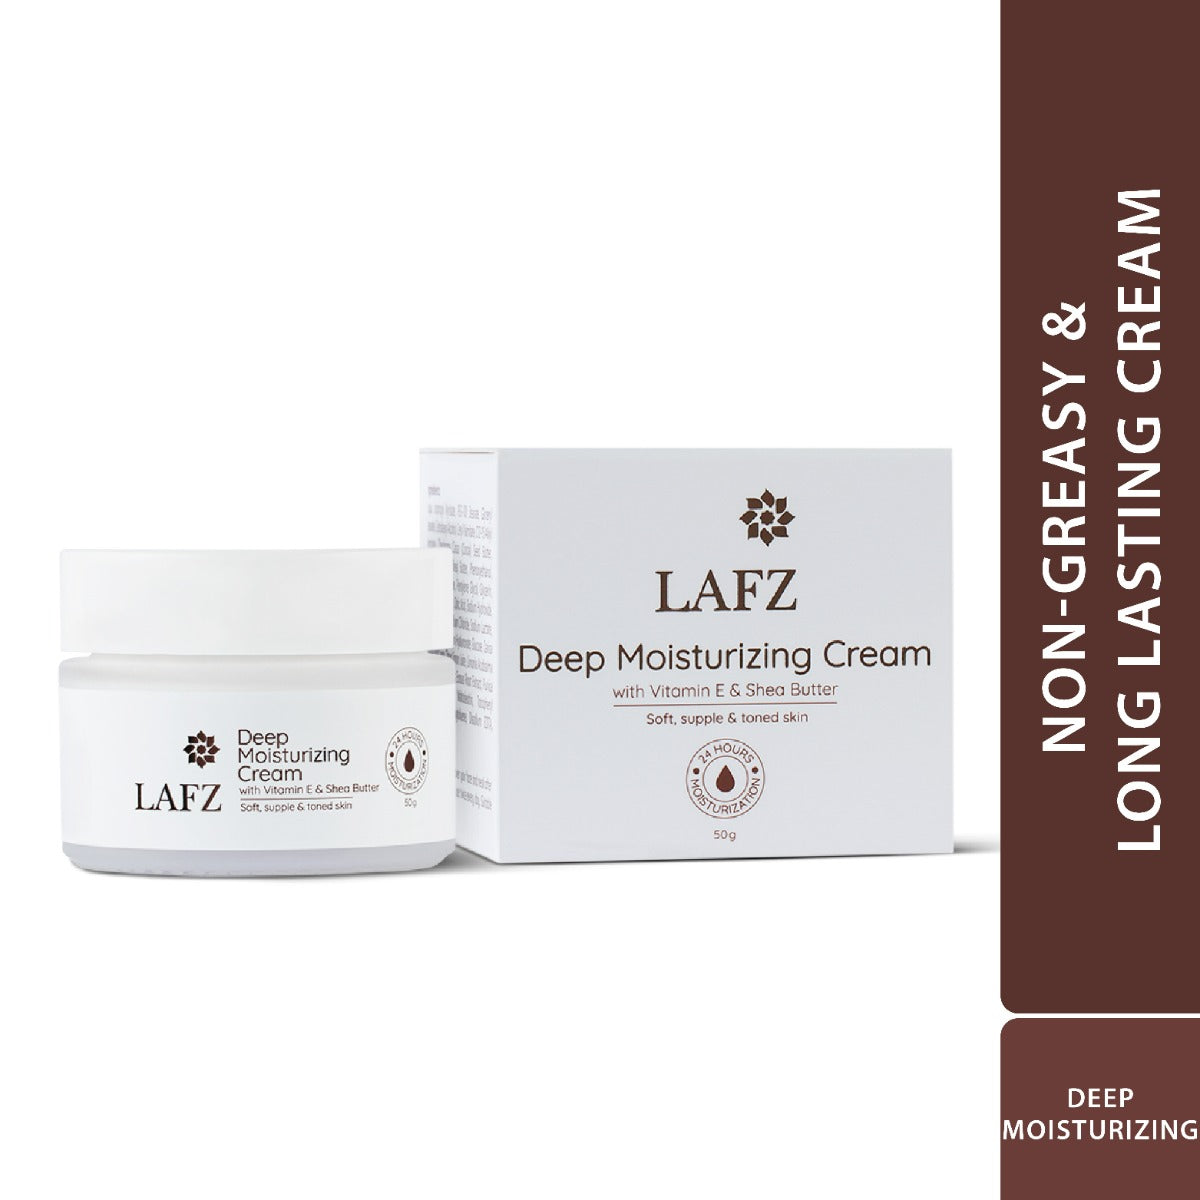 Lafz Deep Moisturizing Cream (50g)